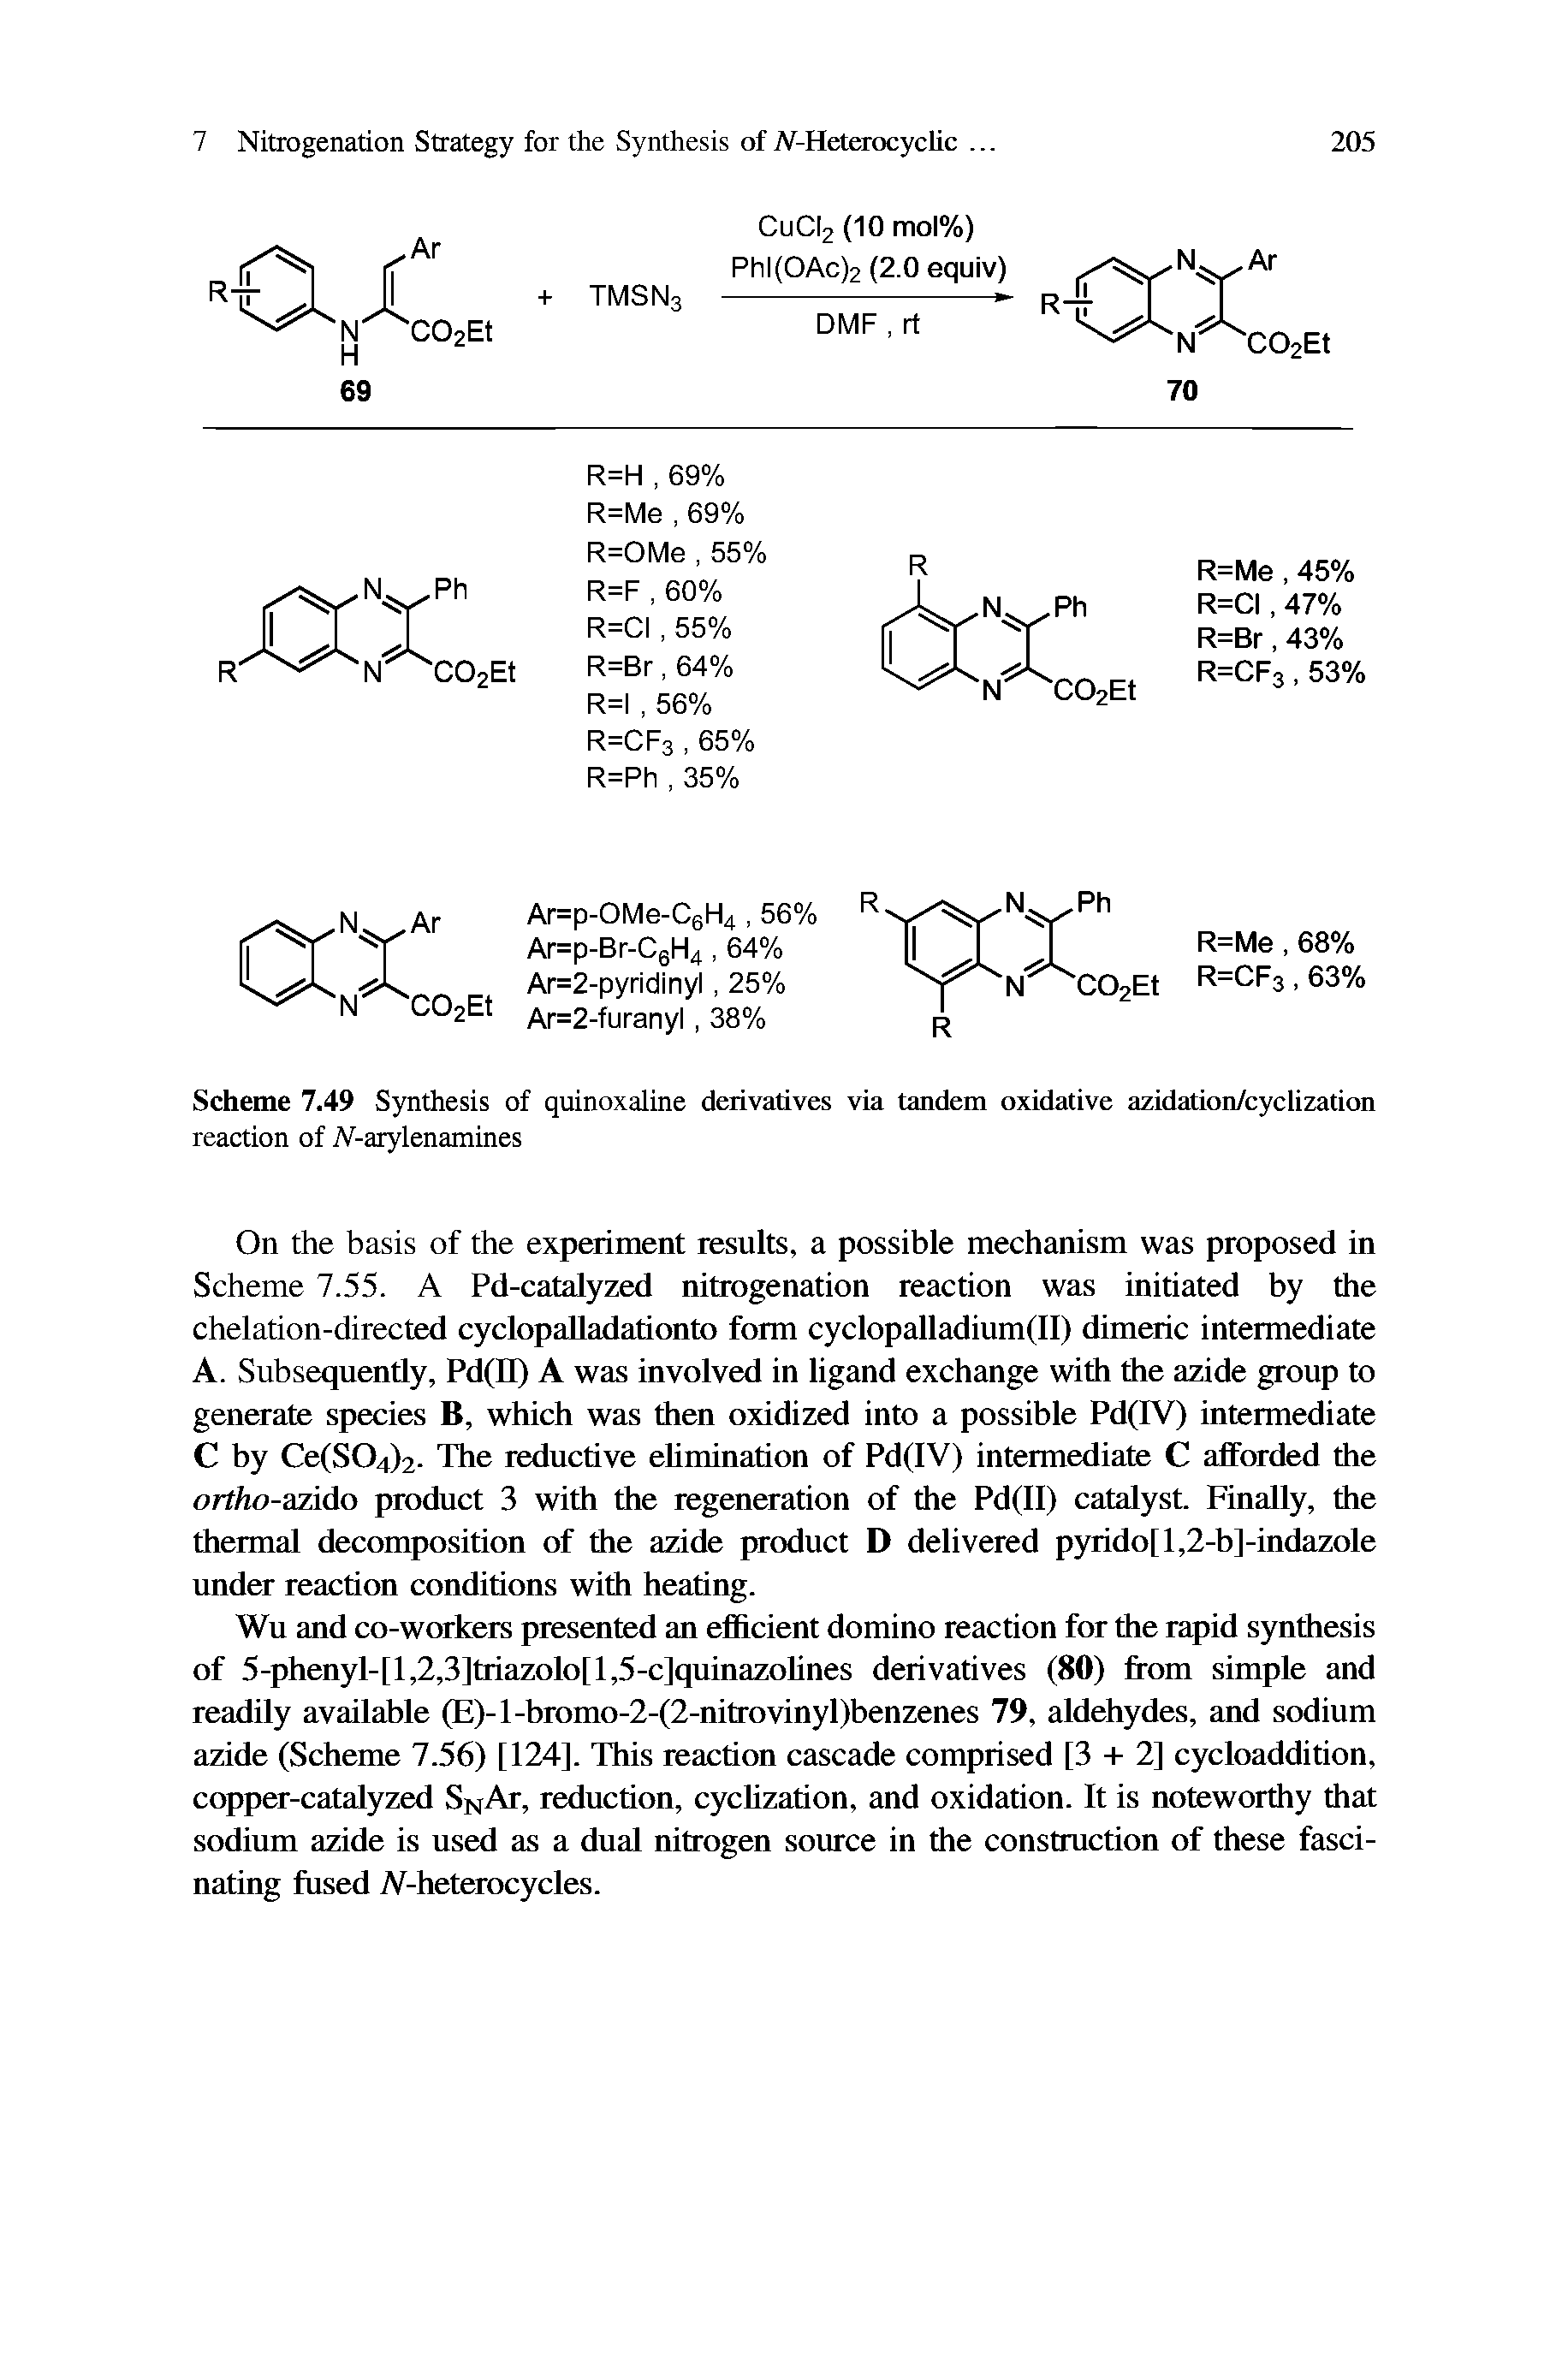 Scheme 7.49 Synthesis of quinoxaline derivatives via tandem oxidative azidation/cyclization...